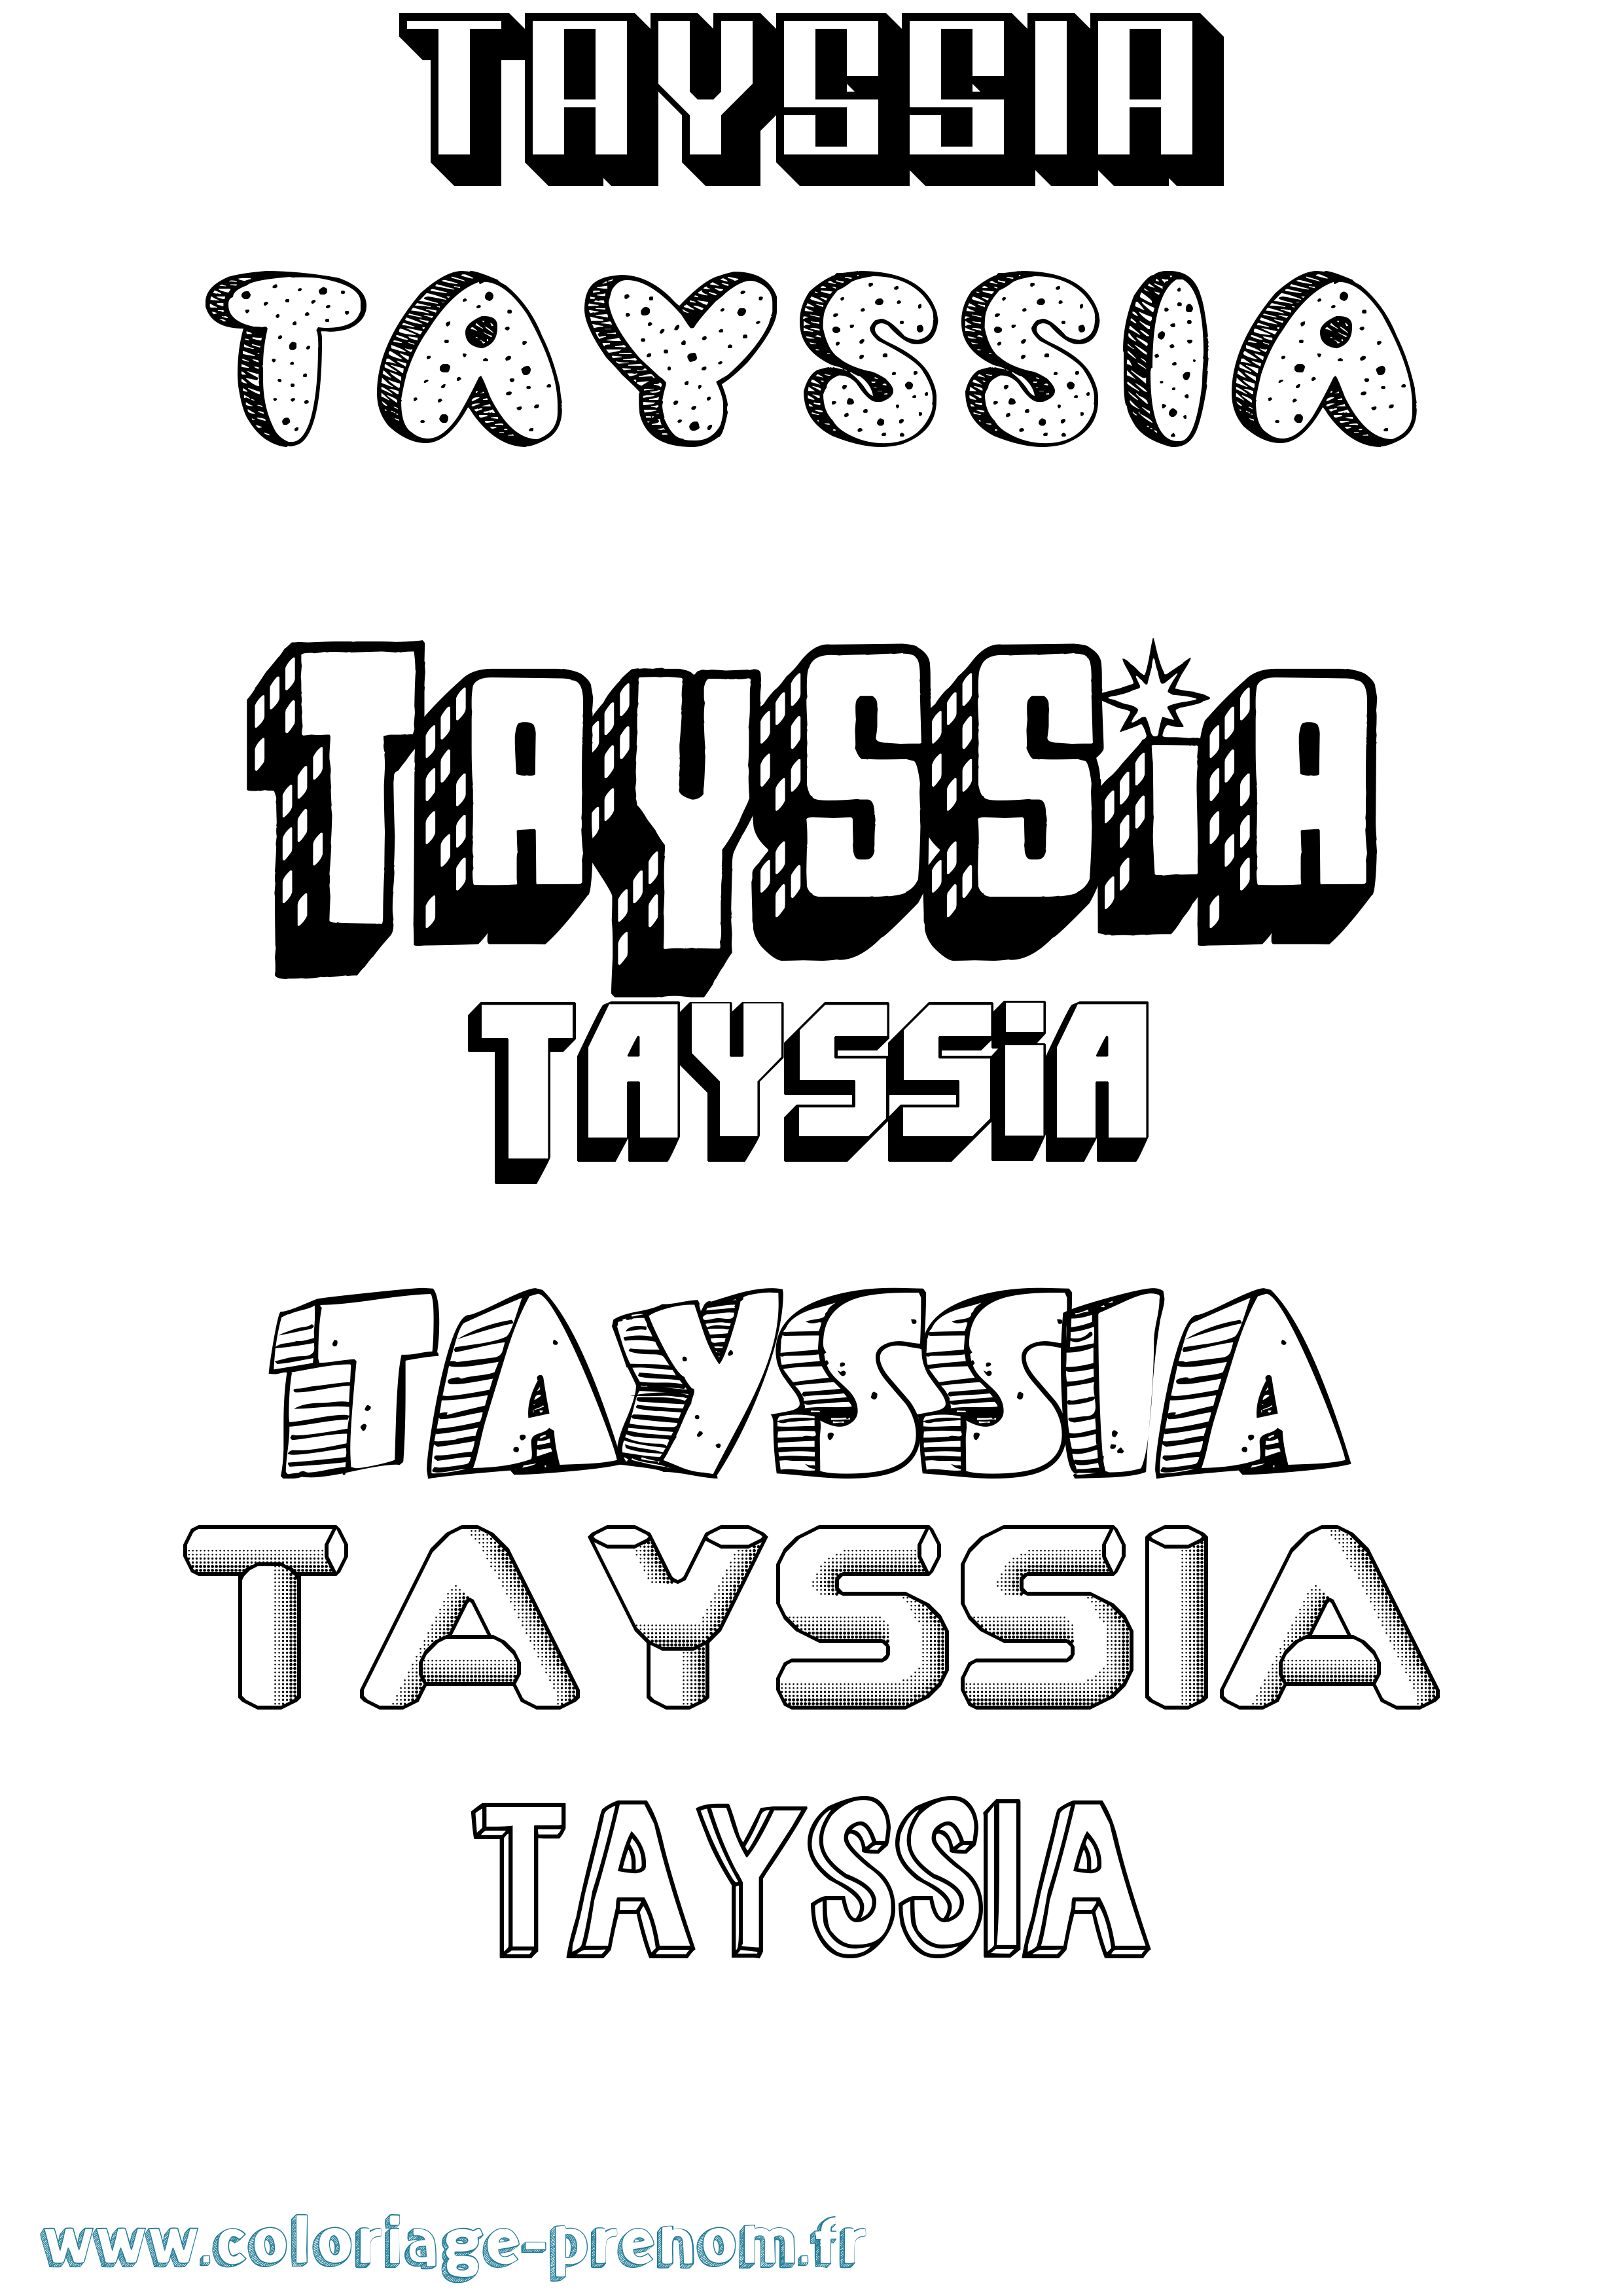 Coloriage prénom Tayssia Effet 3D